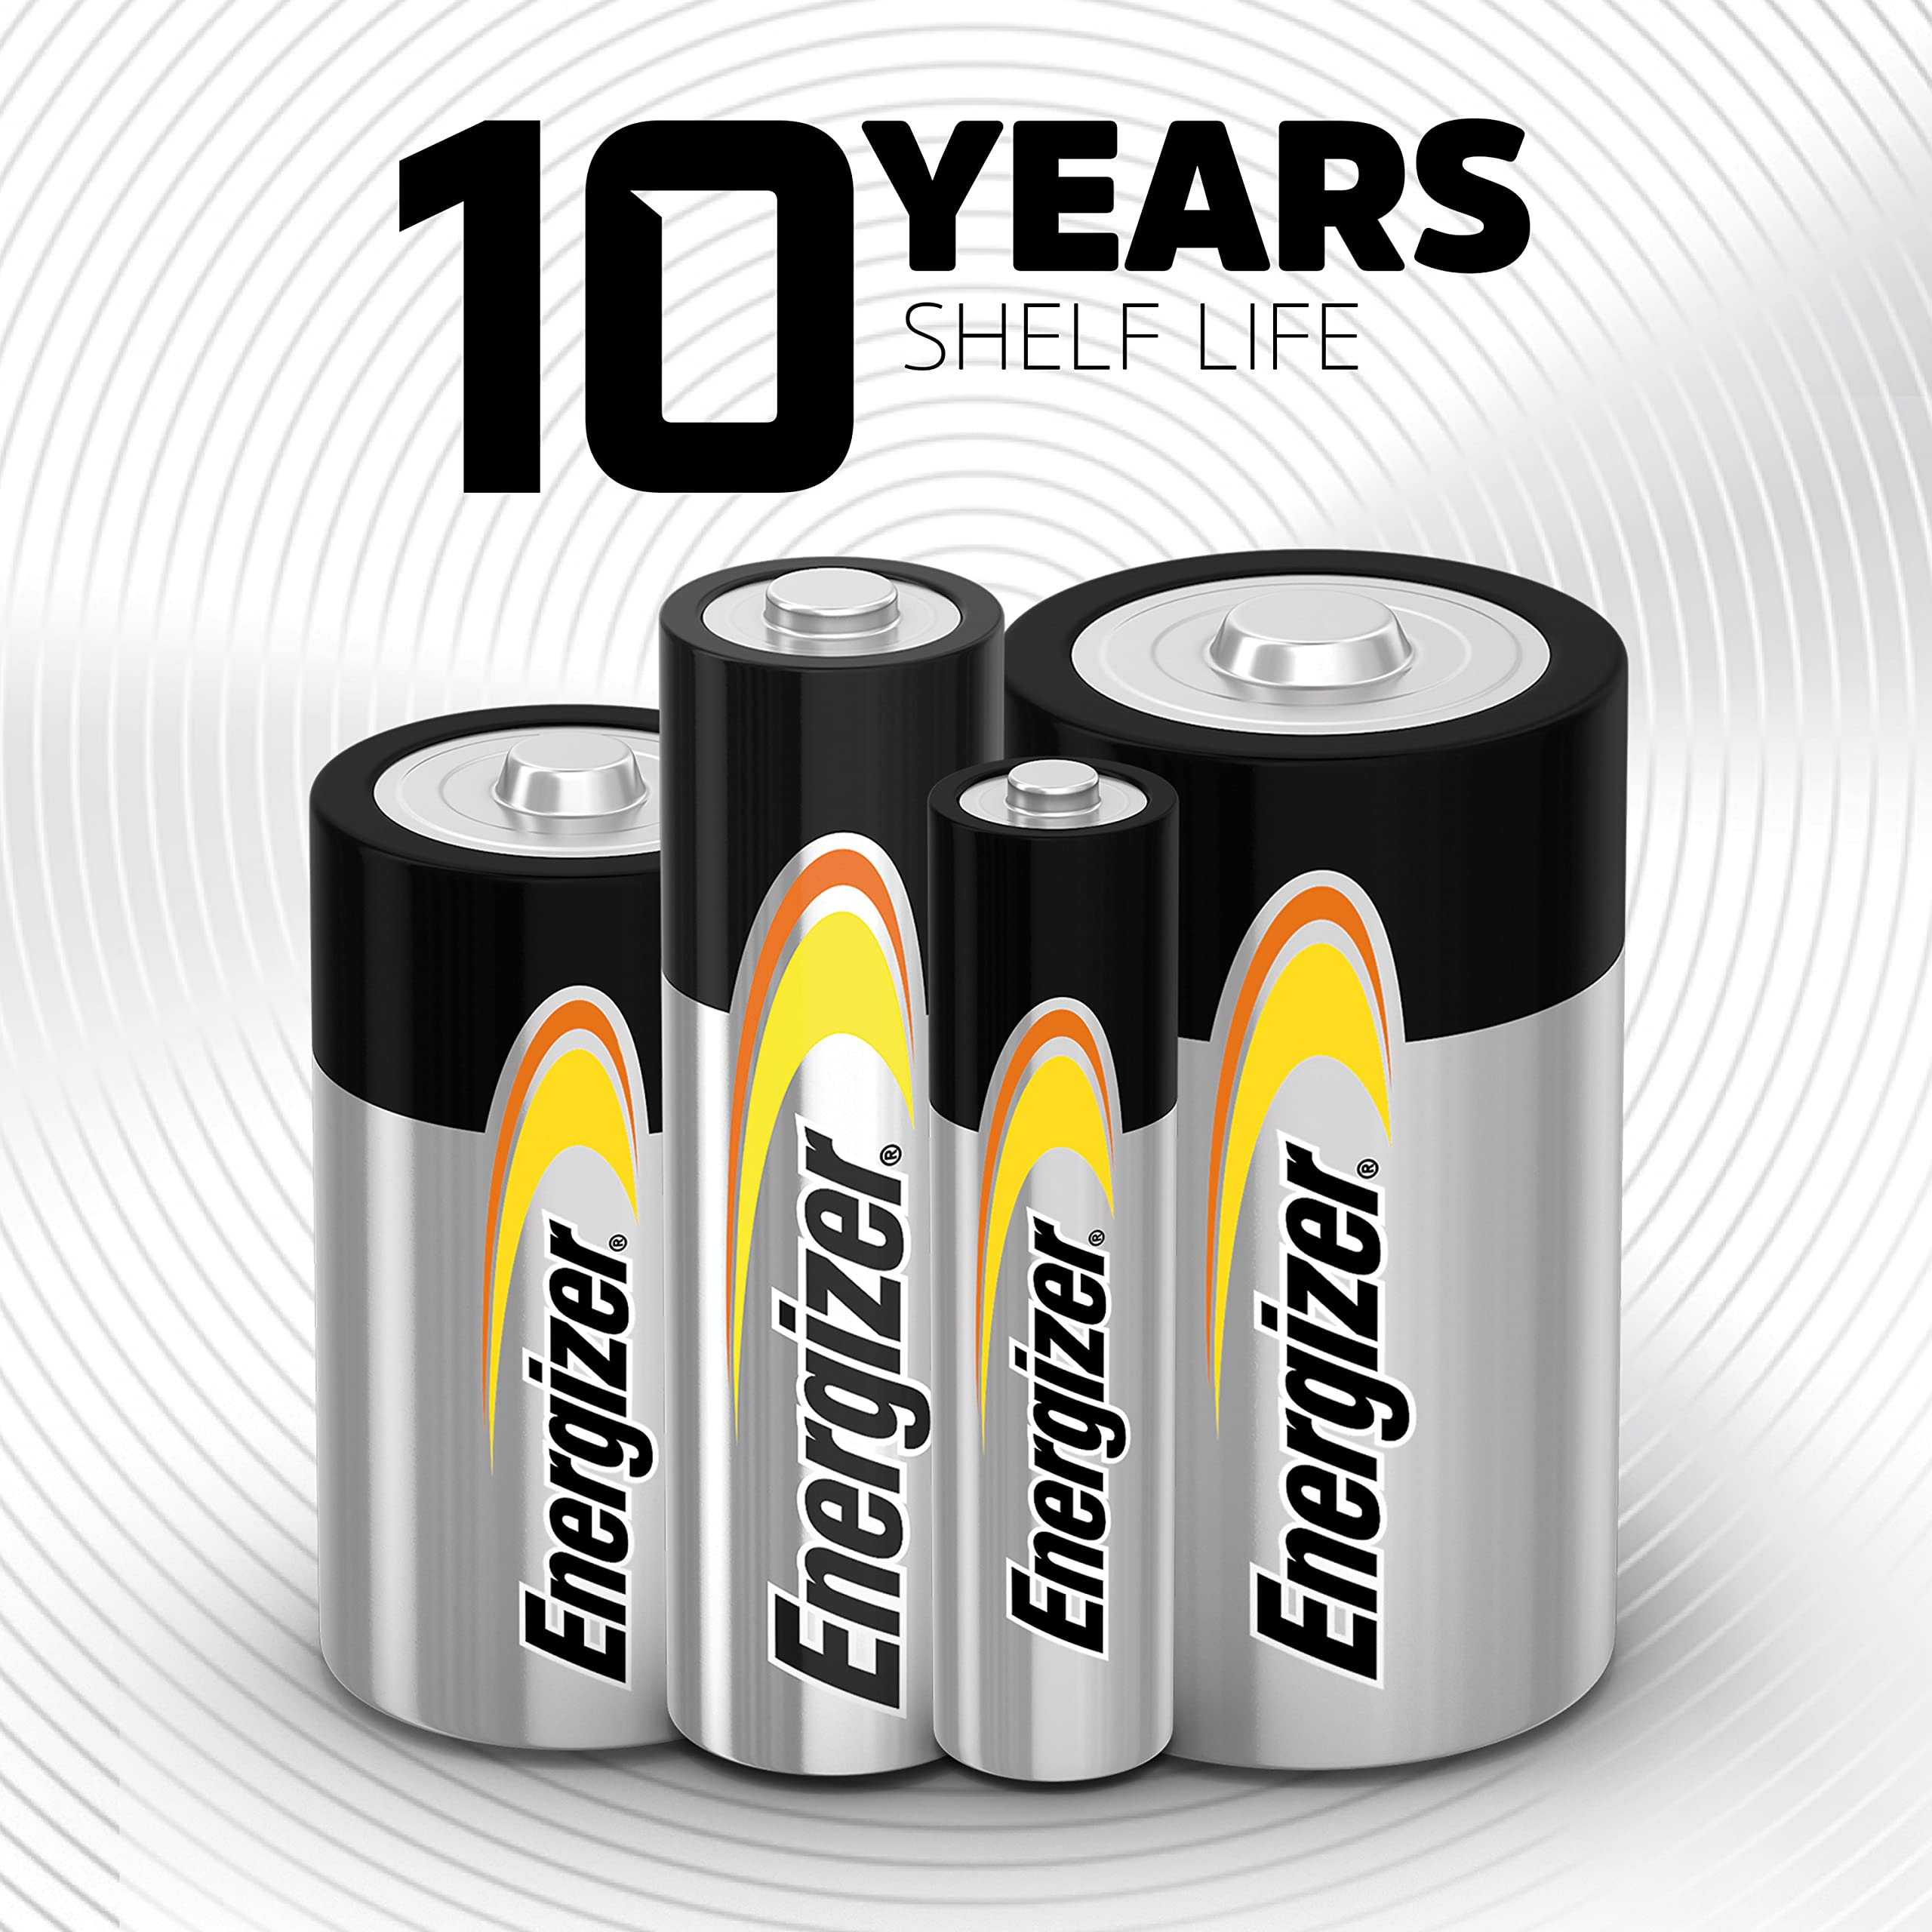 Energizer Alkaline Power C Batteries (12 Pack), Long-Lasting Alkaline C Cell Batteries - Packaging May Vary